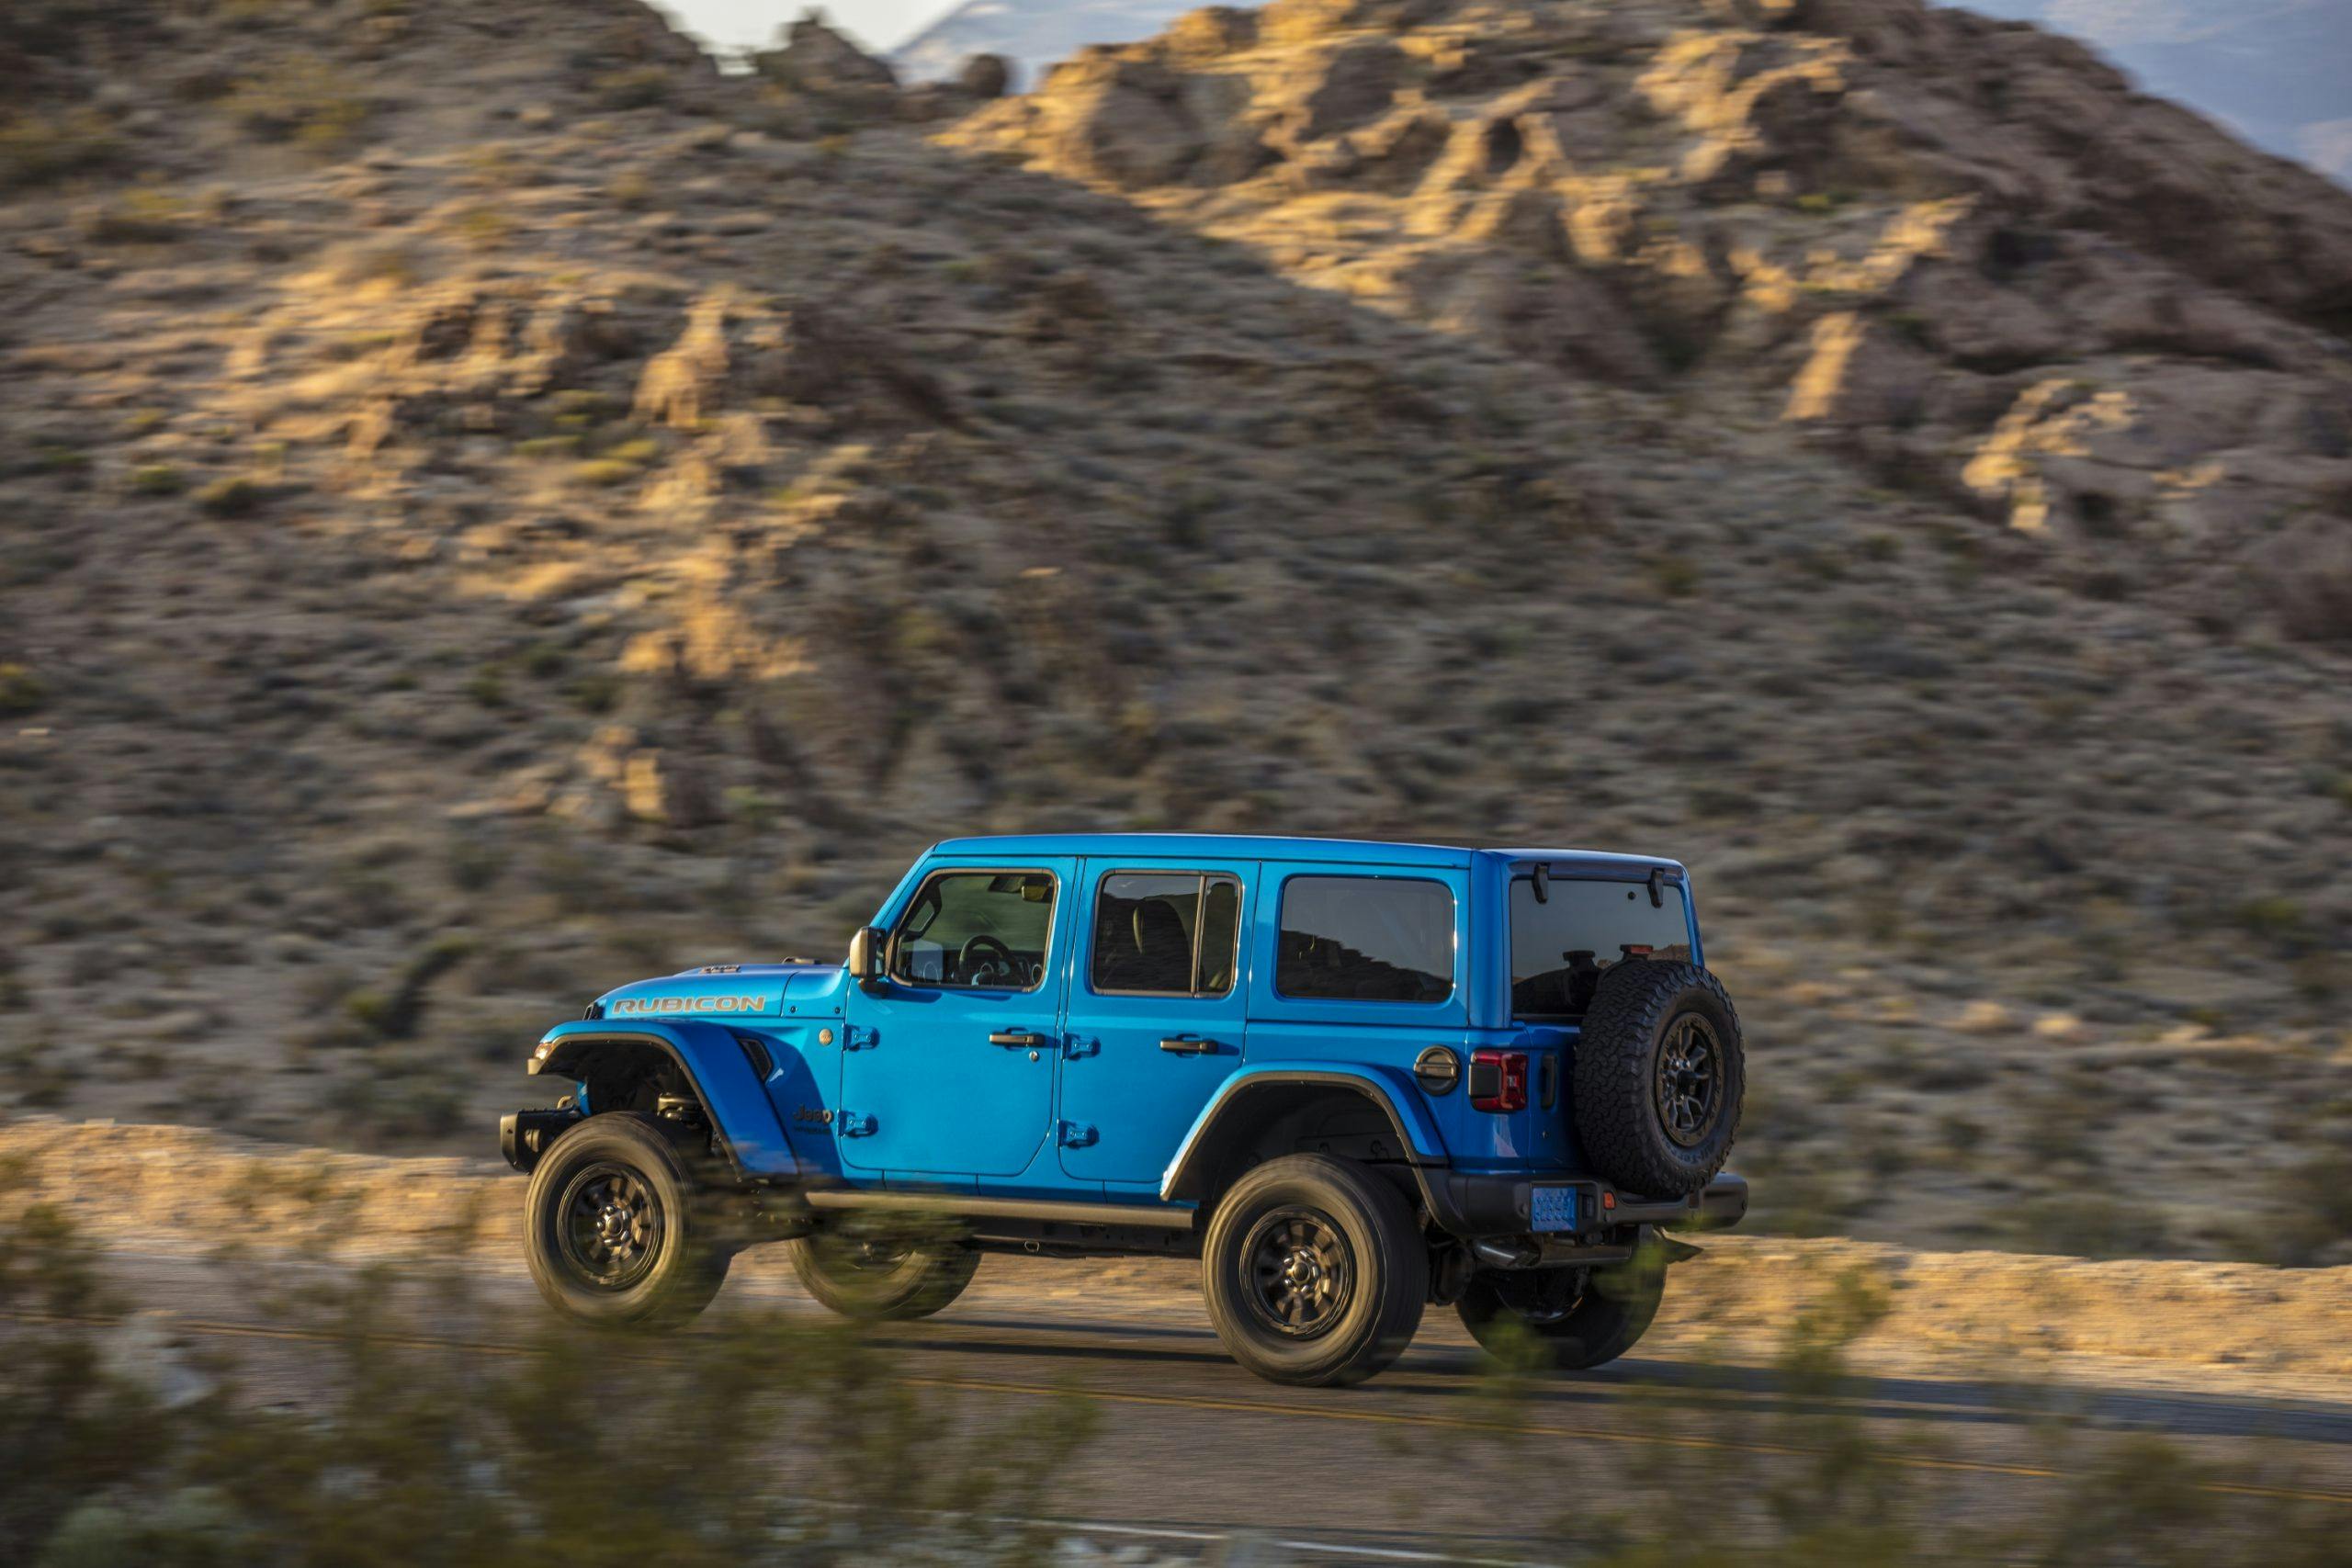 2021 Jeep Wrangler Rubicon 392 blue on road side profile